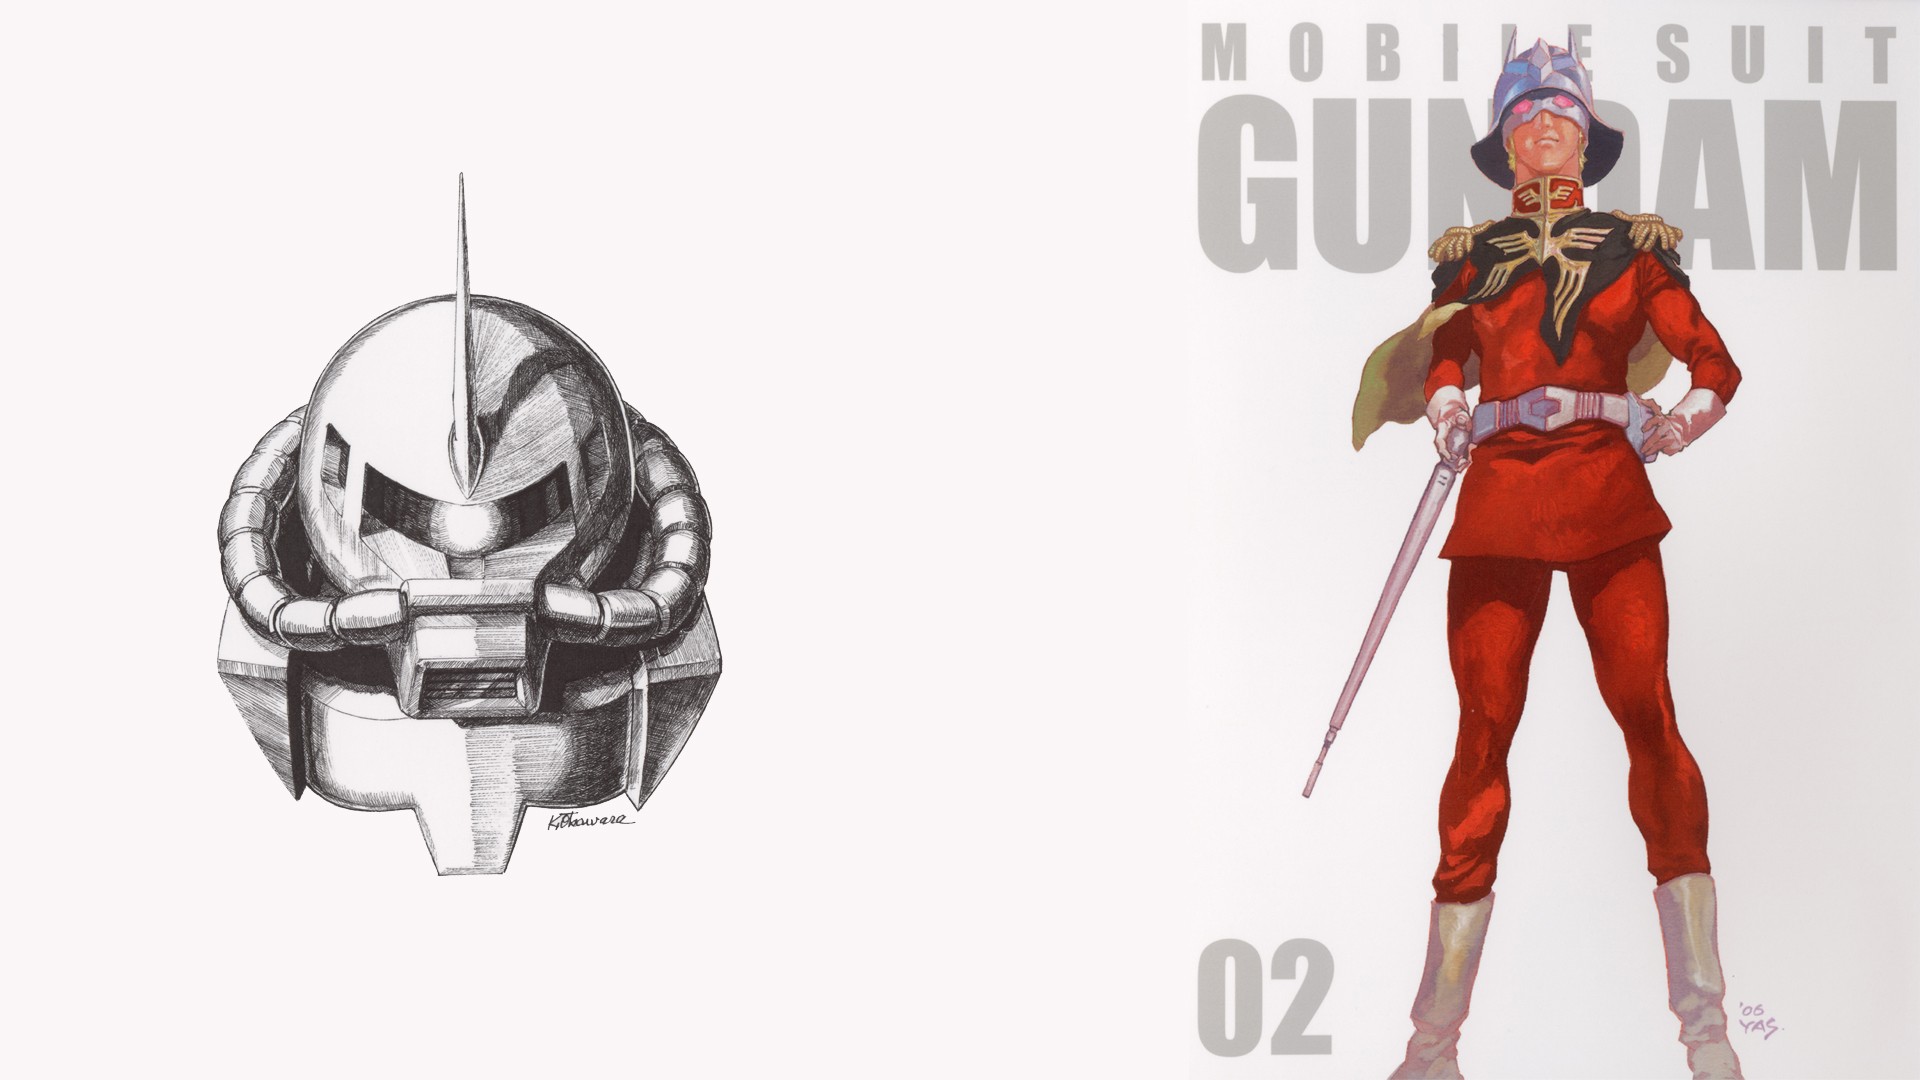 Gundam, Mobile Suit, Char Aznable, Mobile Suit Gundam Wallpaper